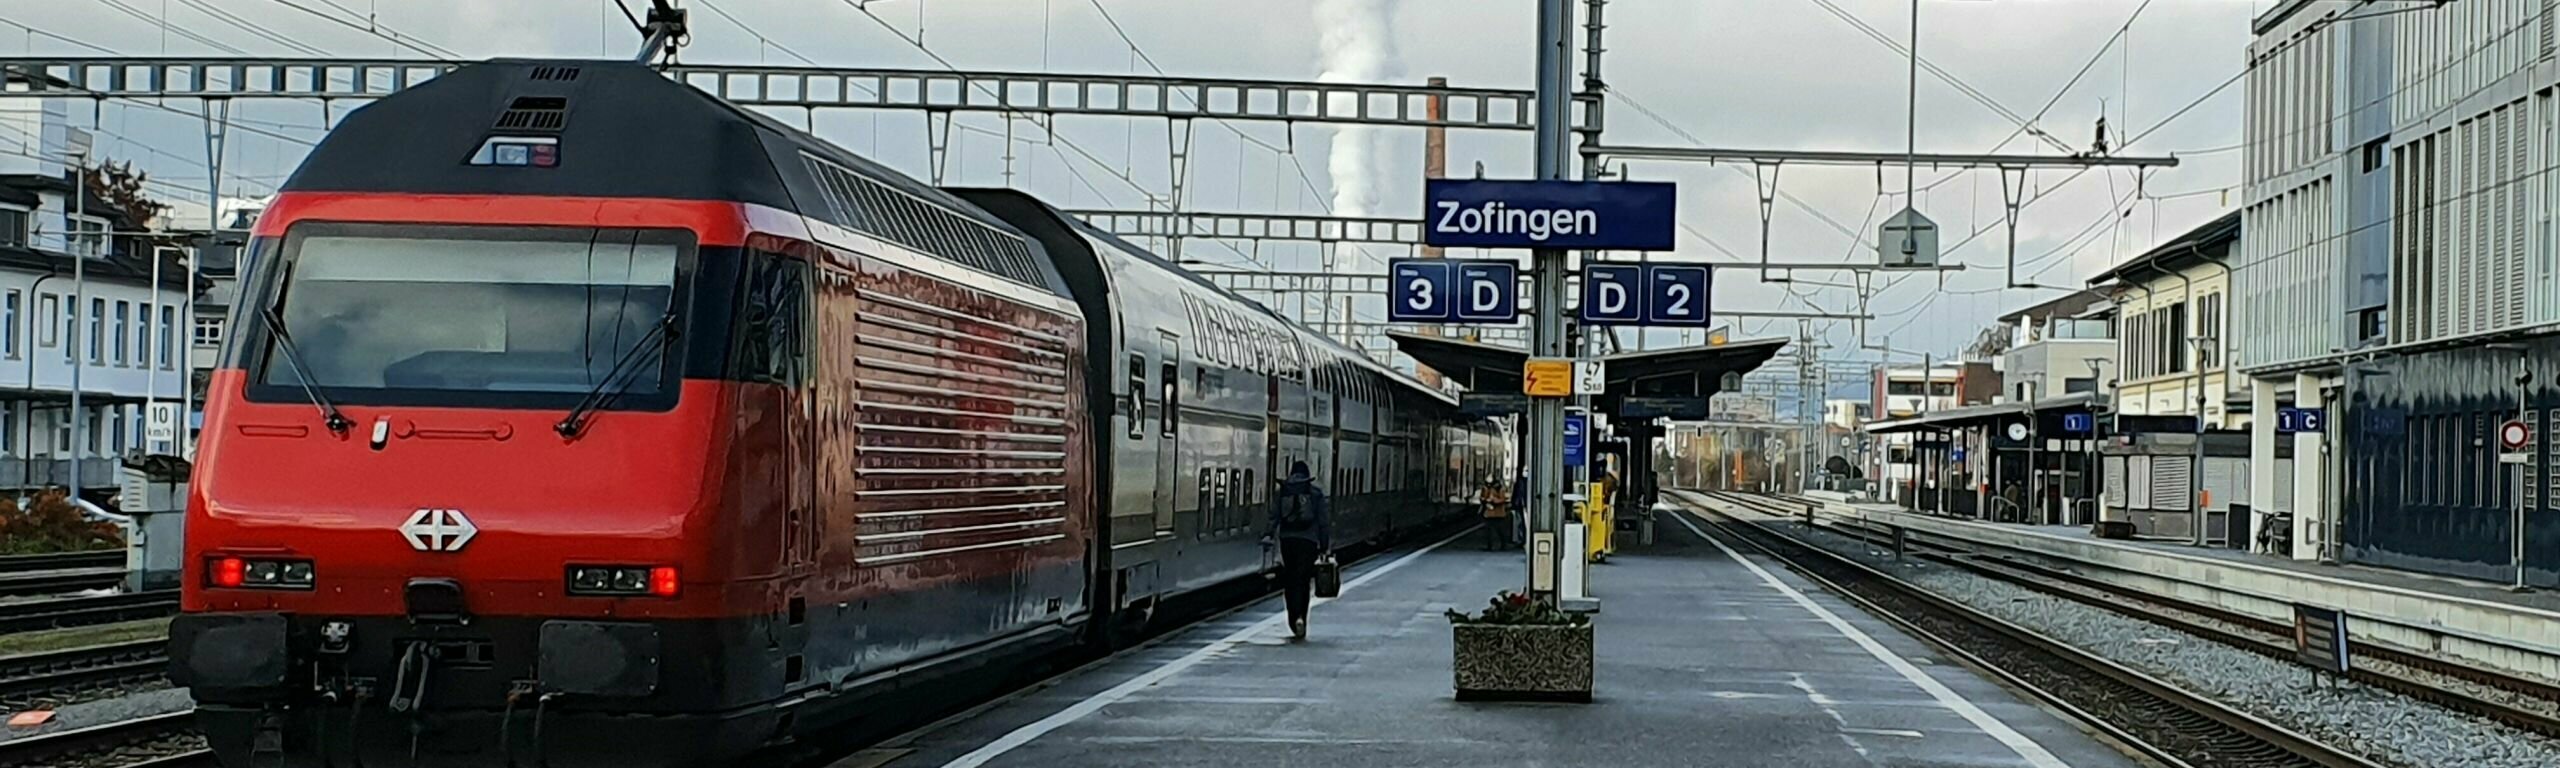 Bahnhof Zofingen